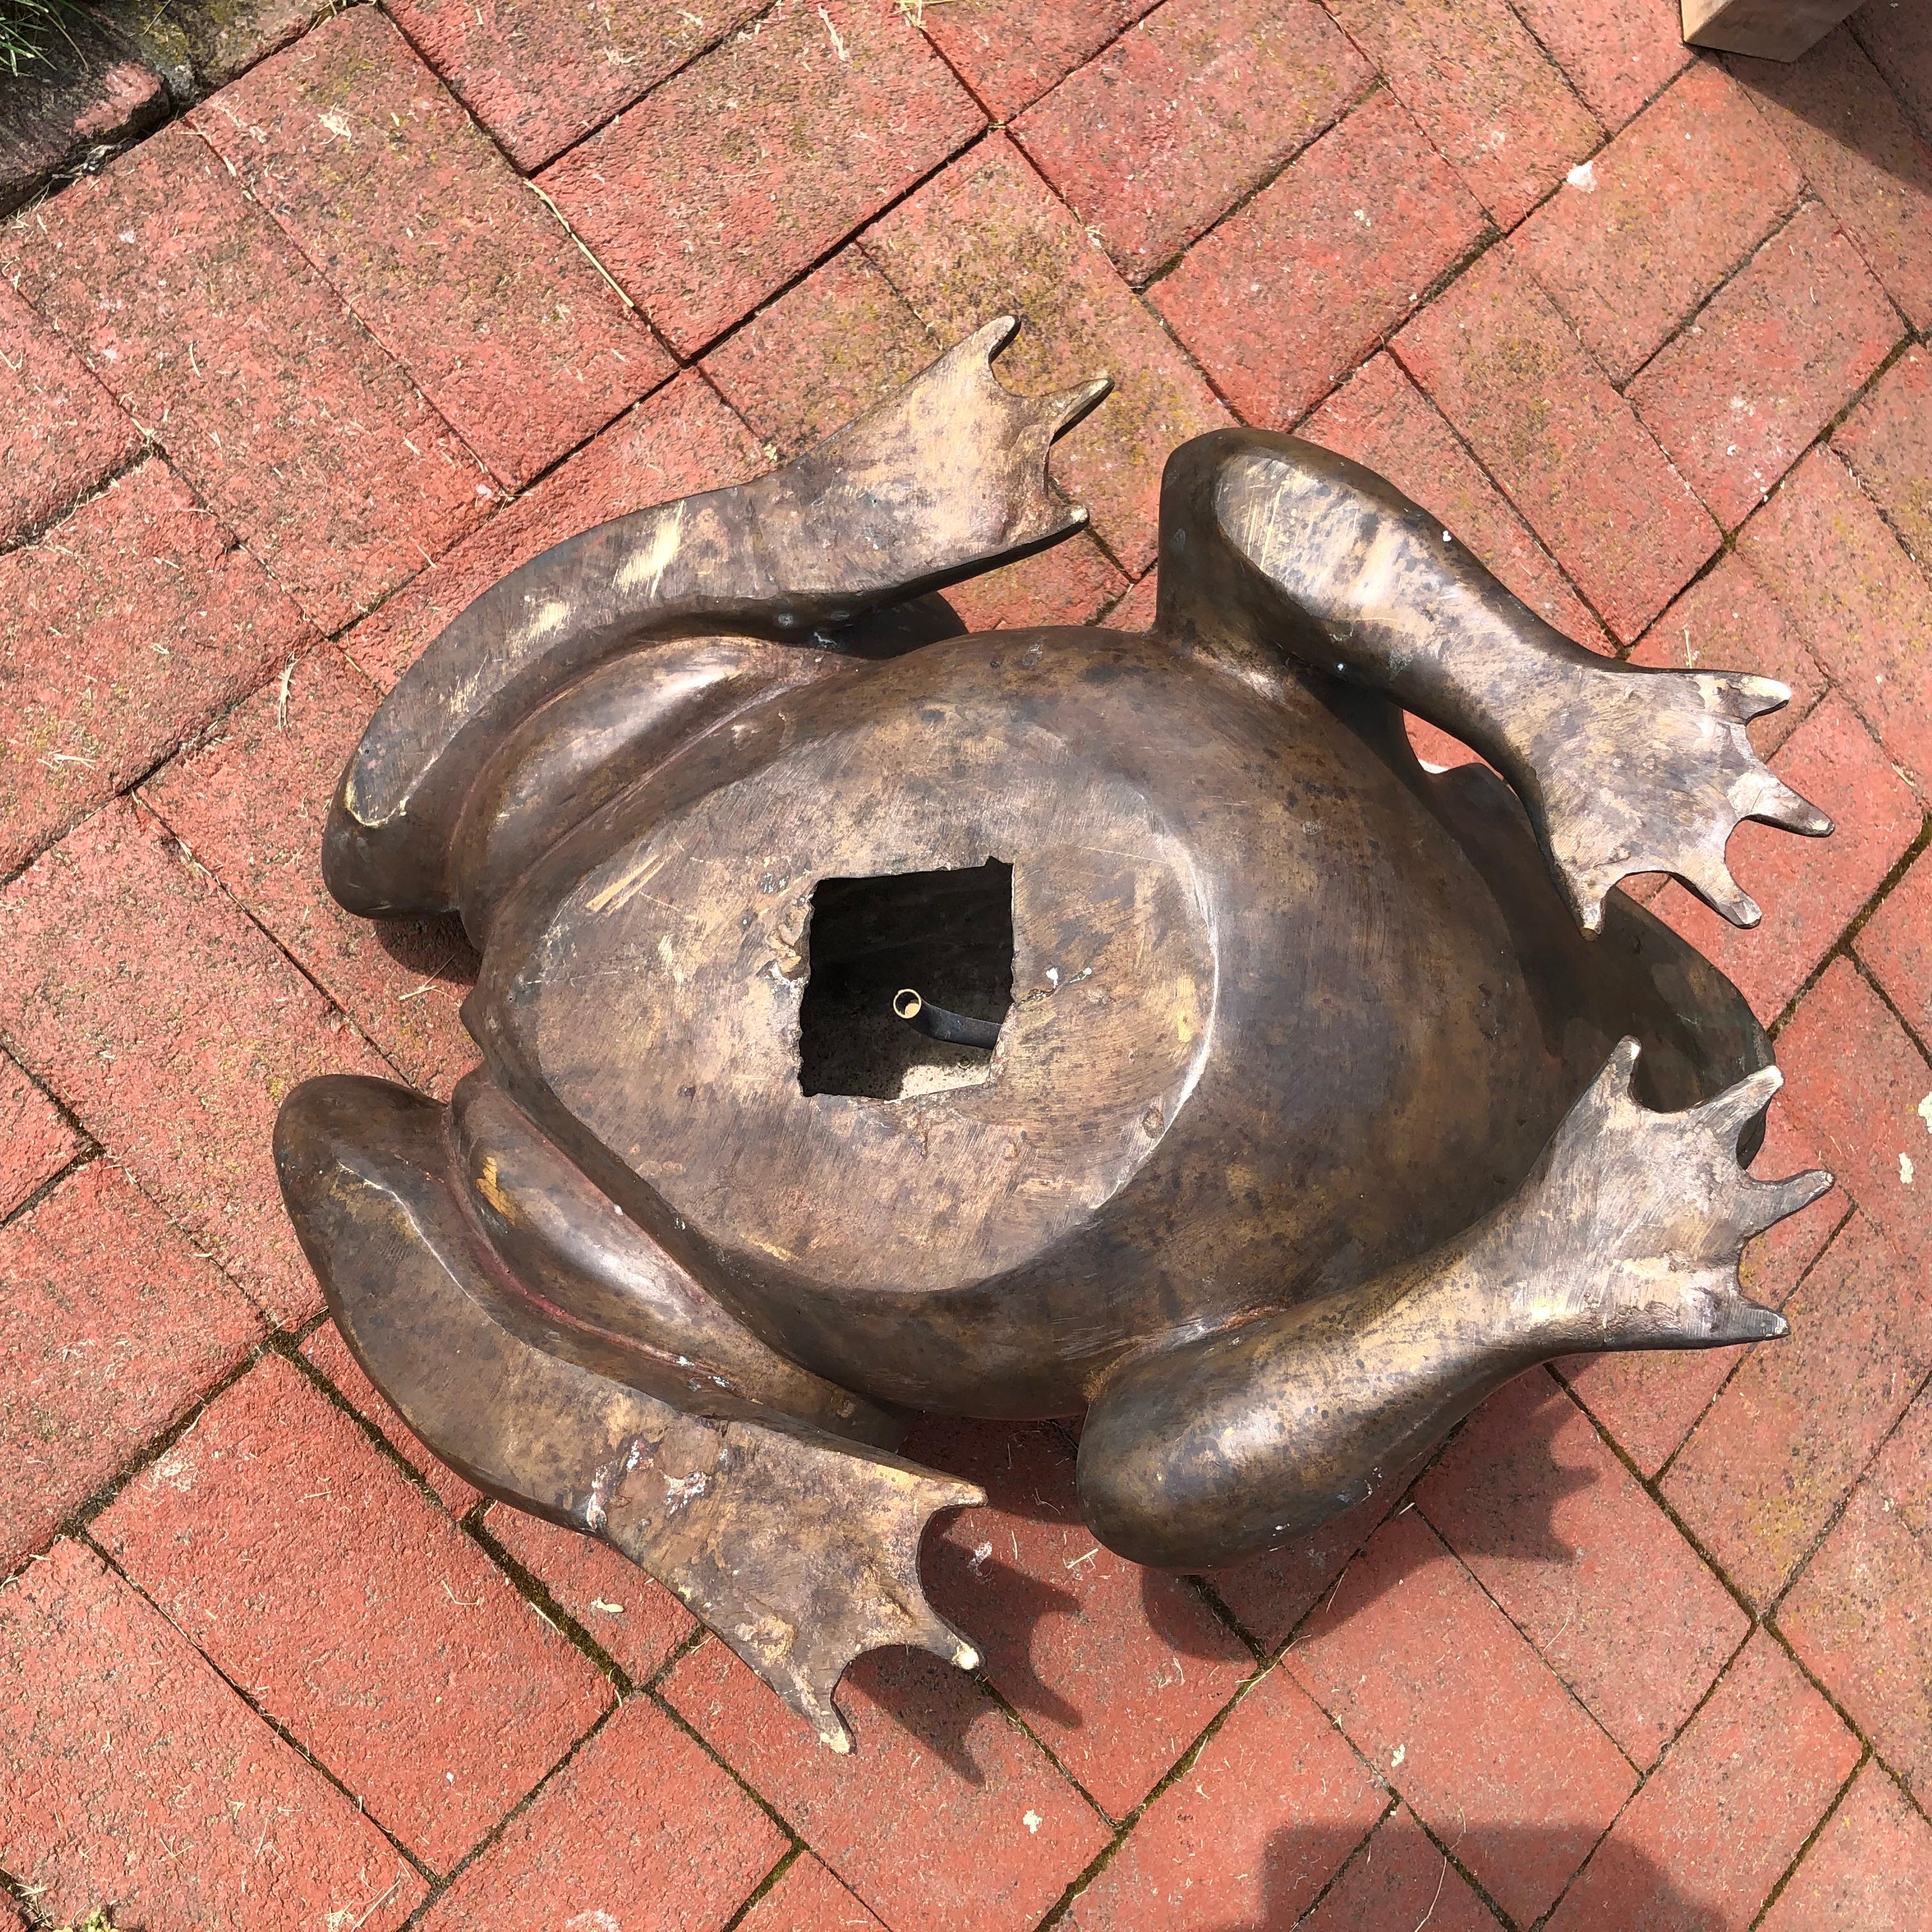 Japanese Giant Antique Bronze Garden Frog with Superb Details 8